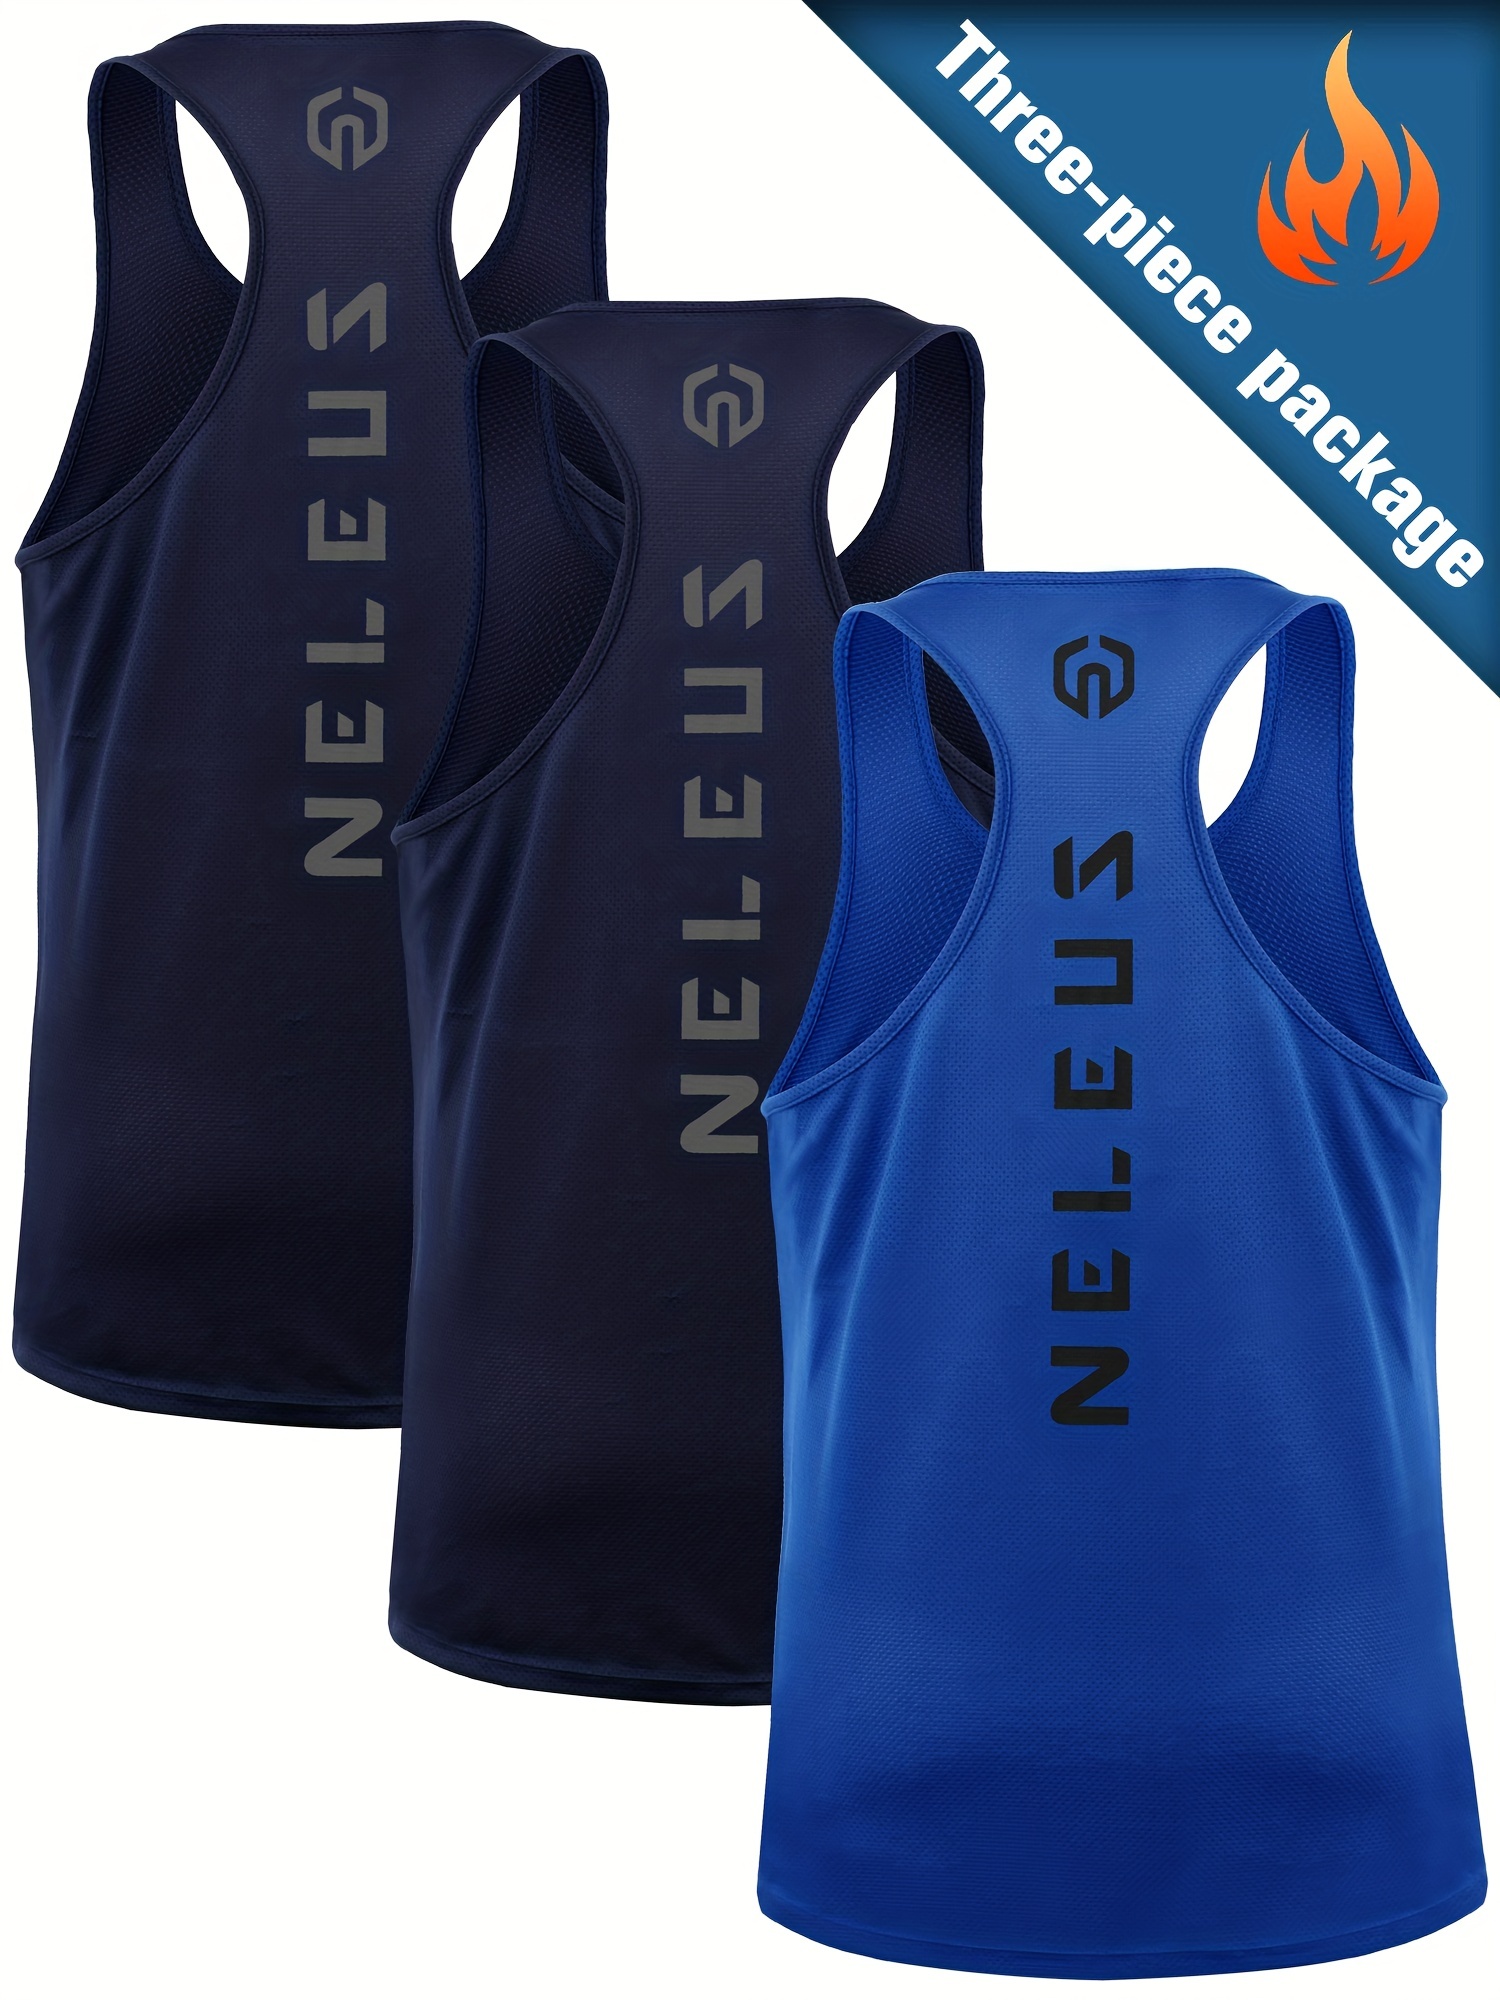 Neleus Men's Workout Tank Tops 3 Pack Sleeveless Running Shirts with Hoodie